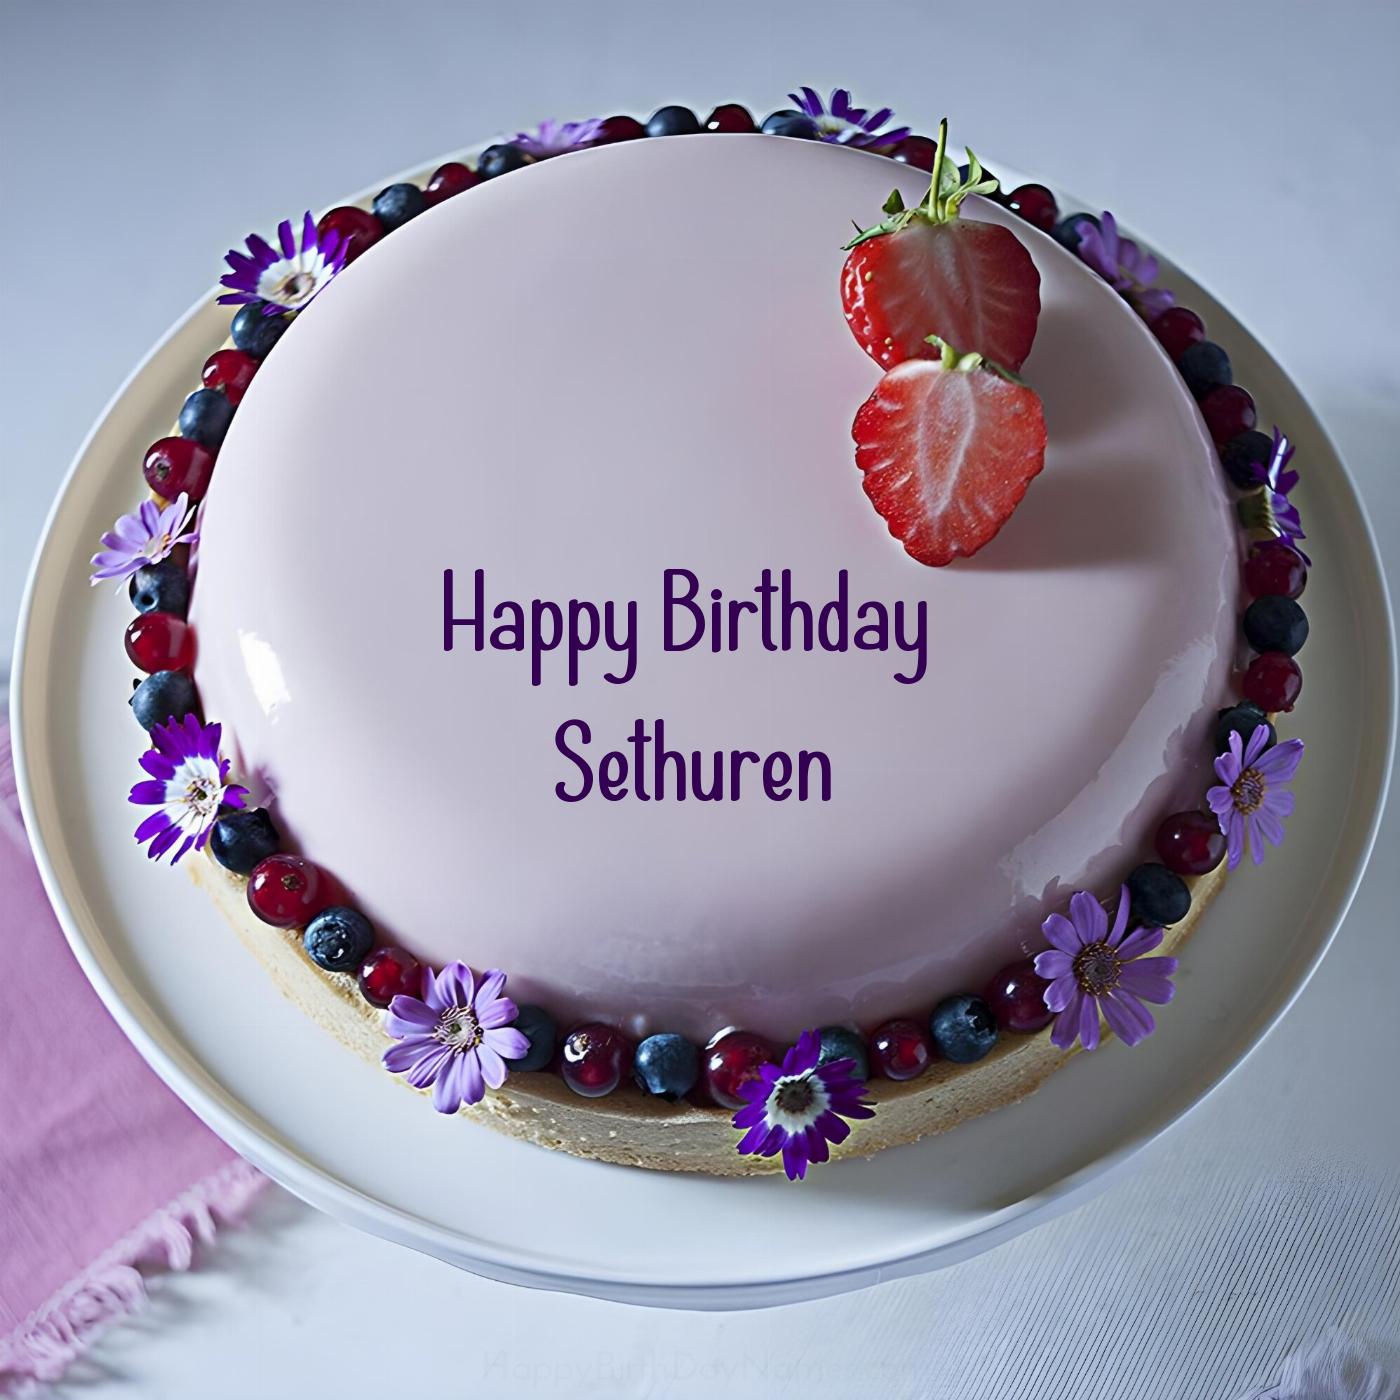 Happy Birthday Sethuren Strawberry Flowers Cake